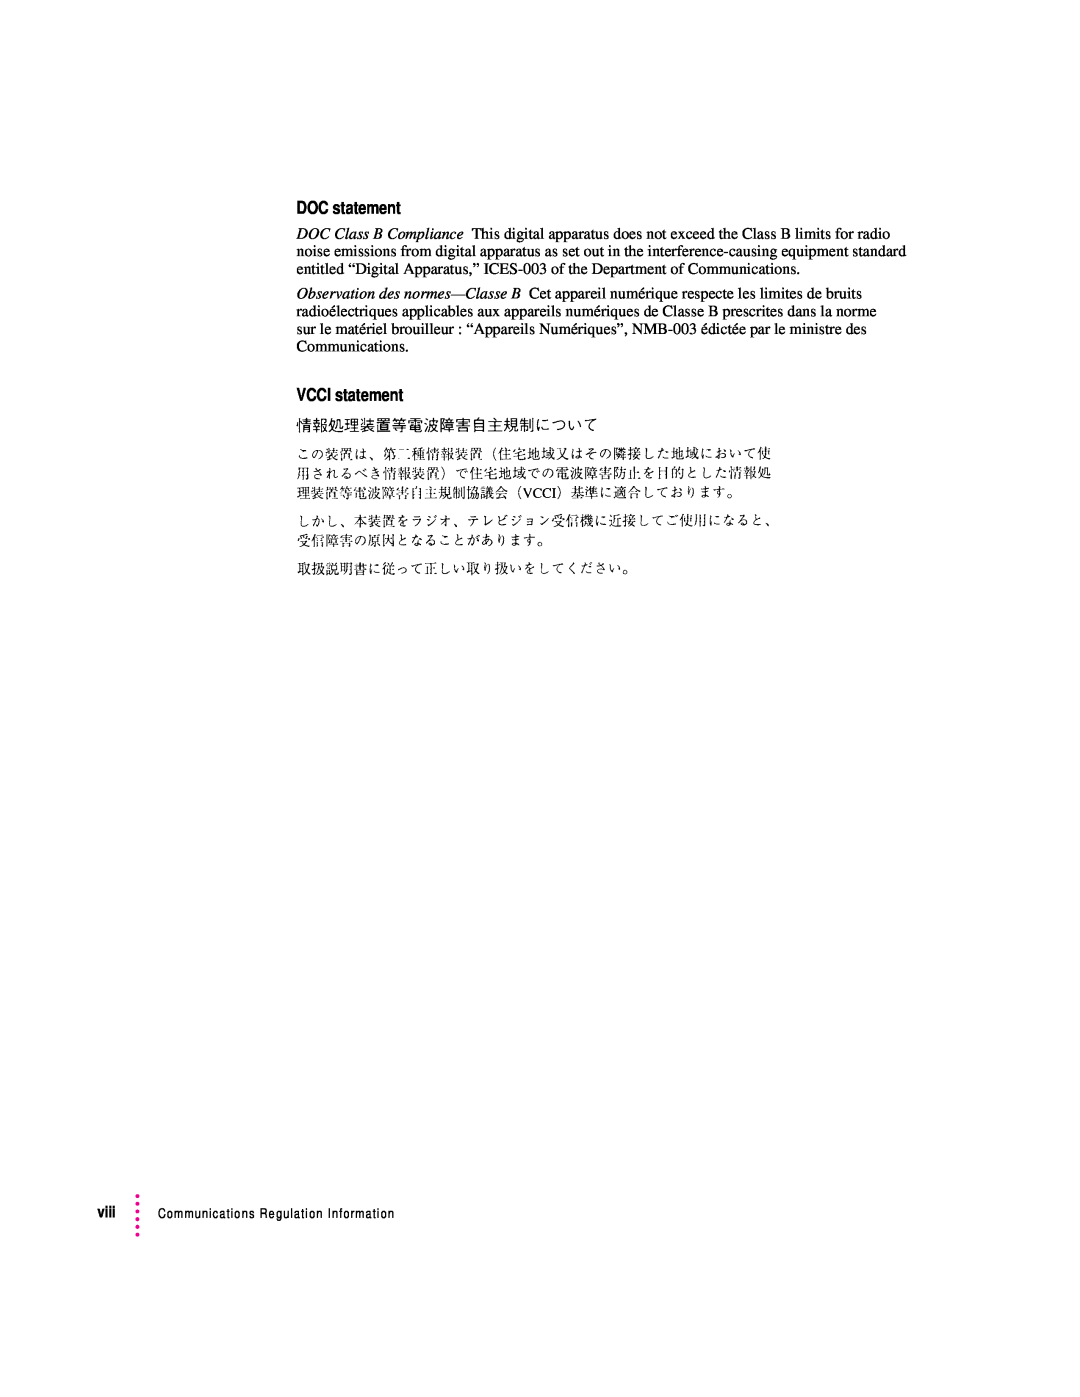 Apple 627, 1230 user manual DOC statement, VCCI statement, viii Communications Regulation Information 